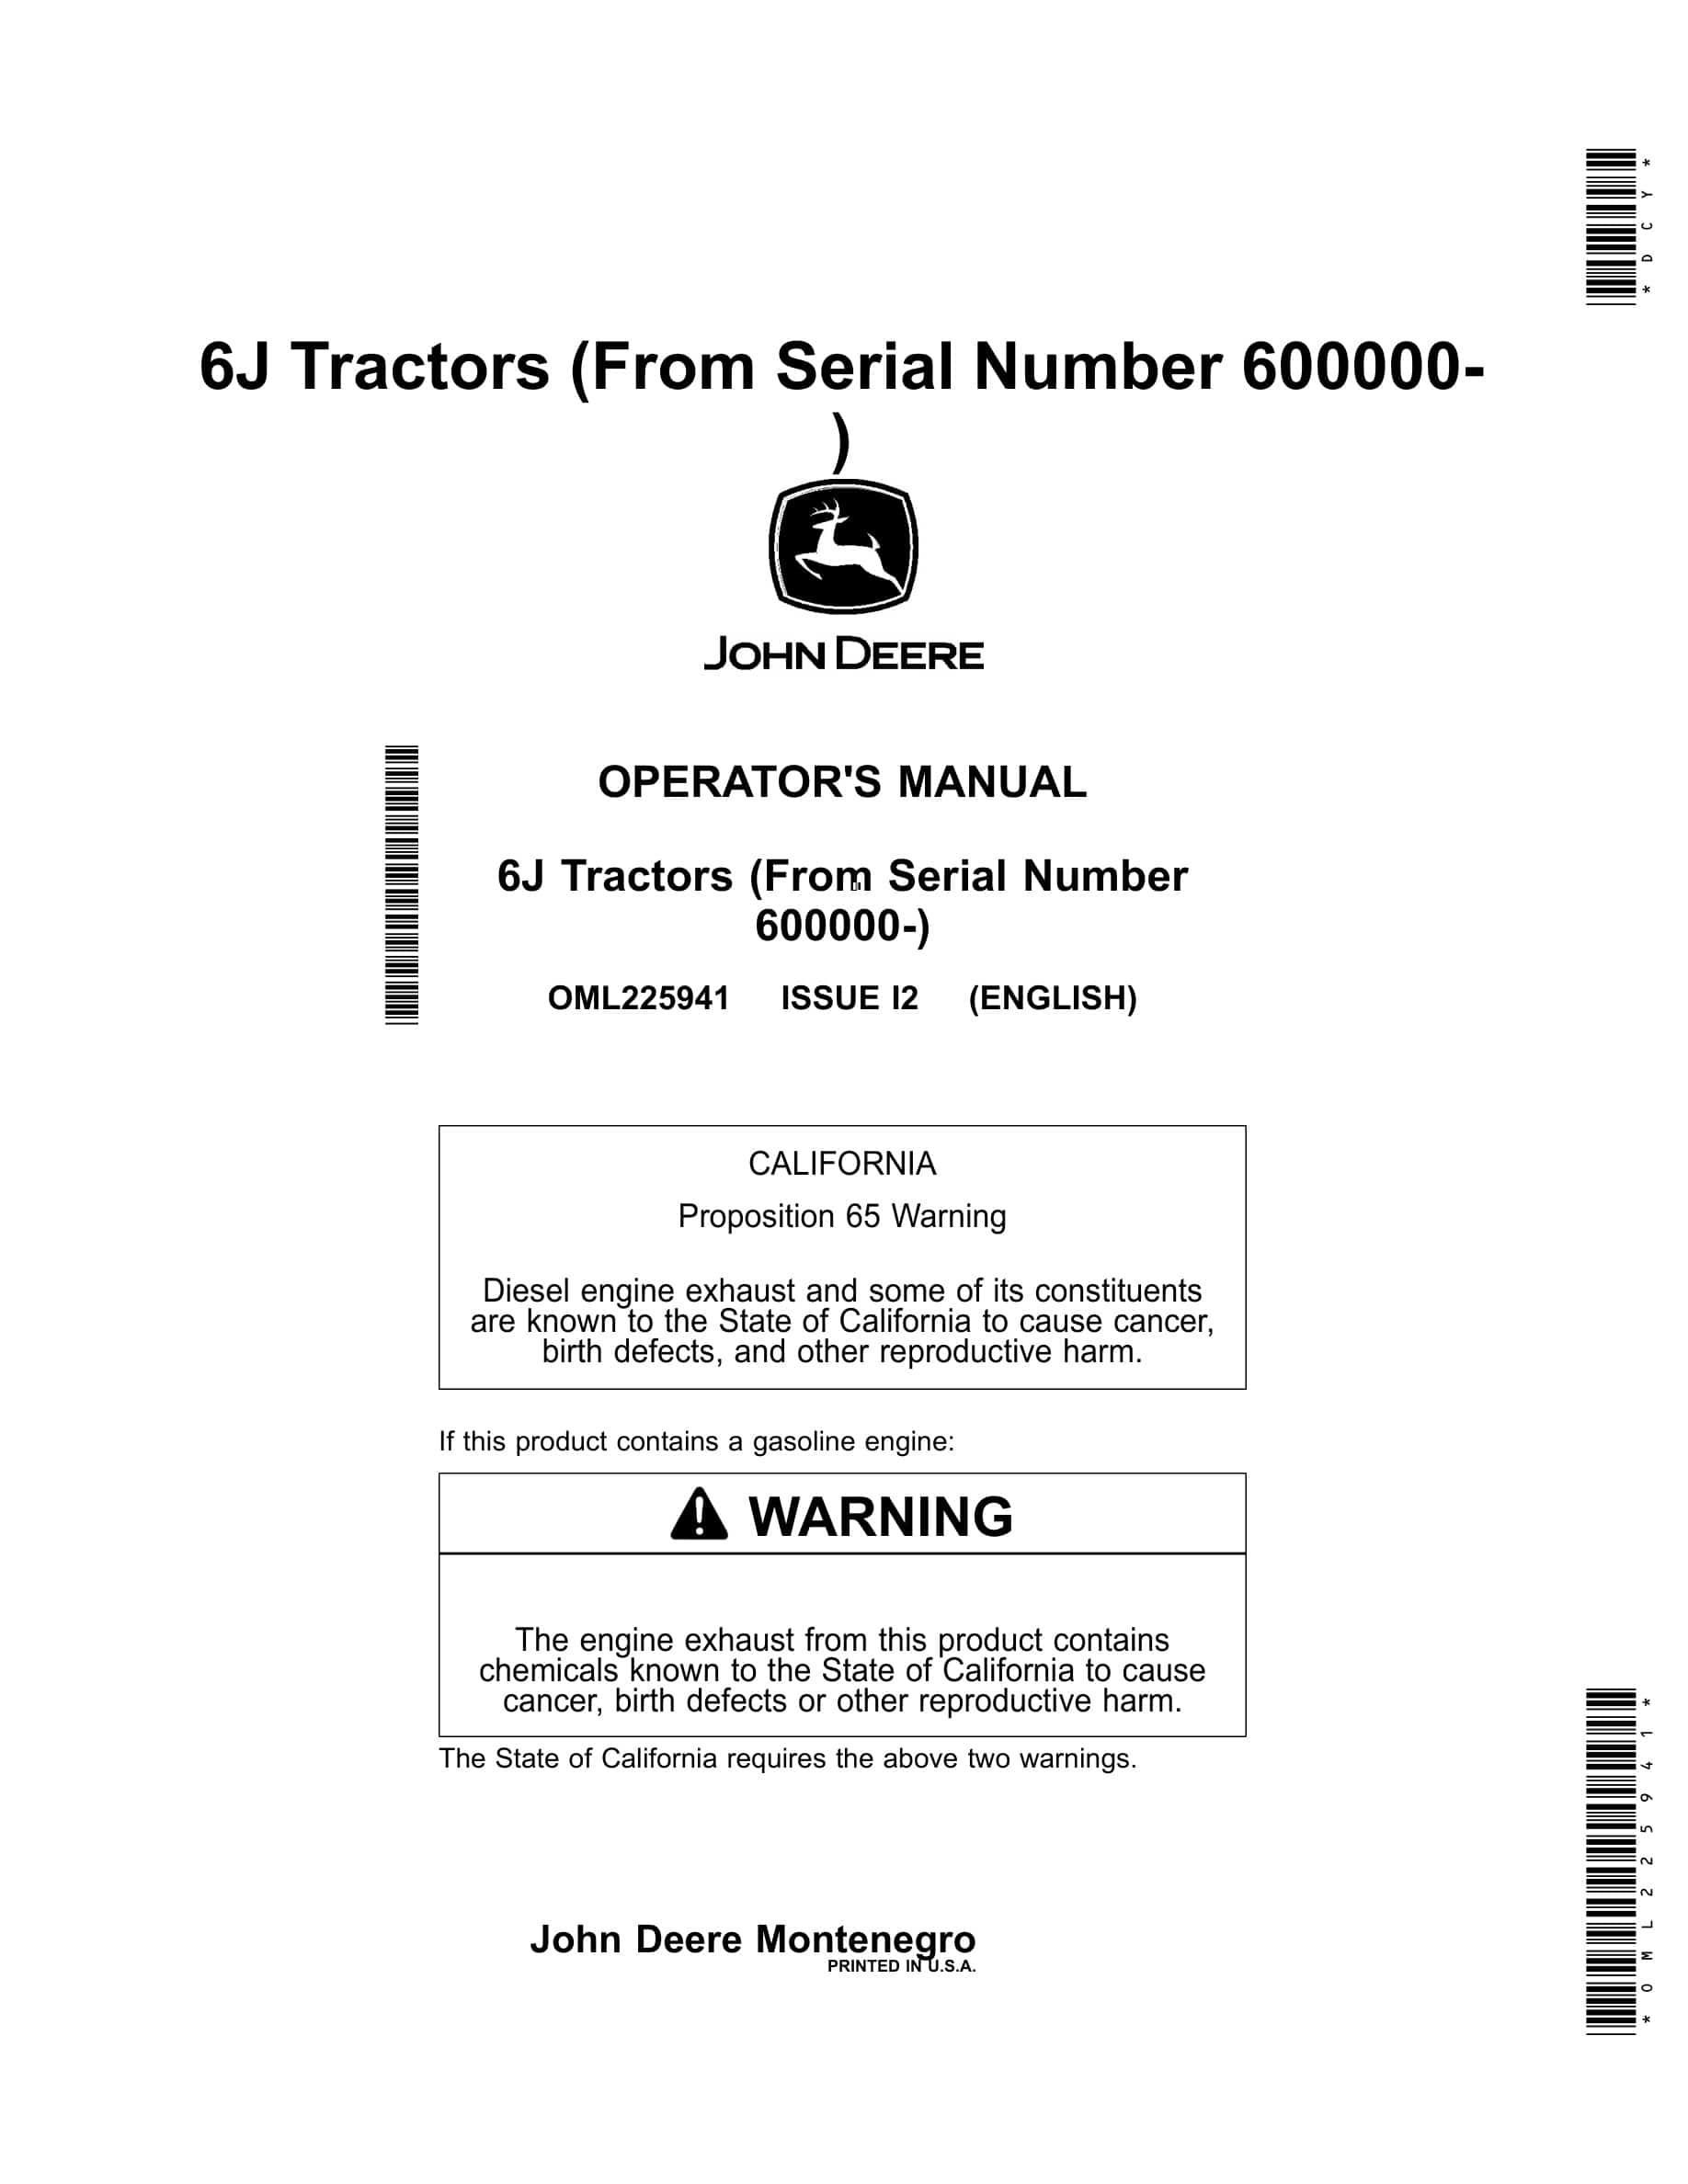 John Deere 6j Tractors Operator Manuals OML225941-1